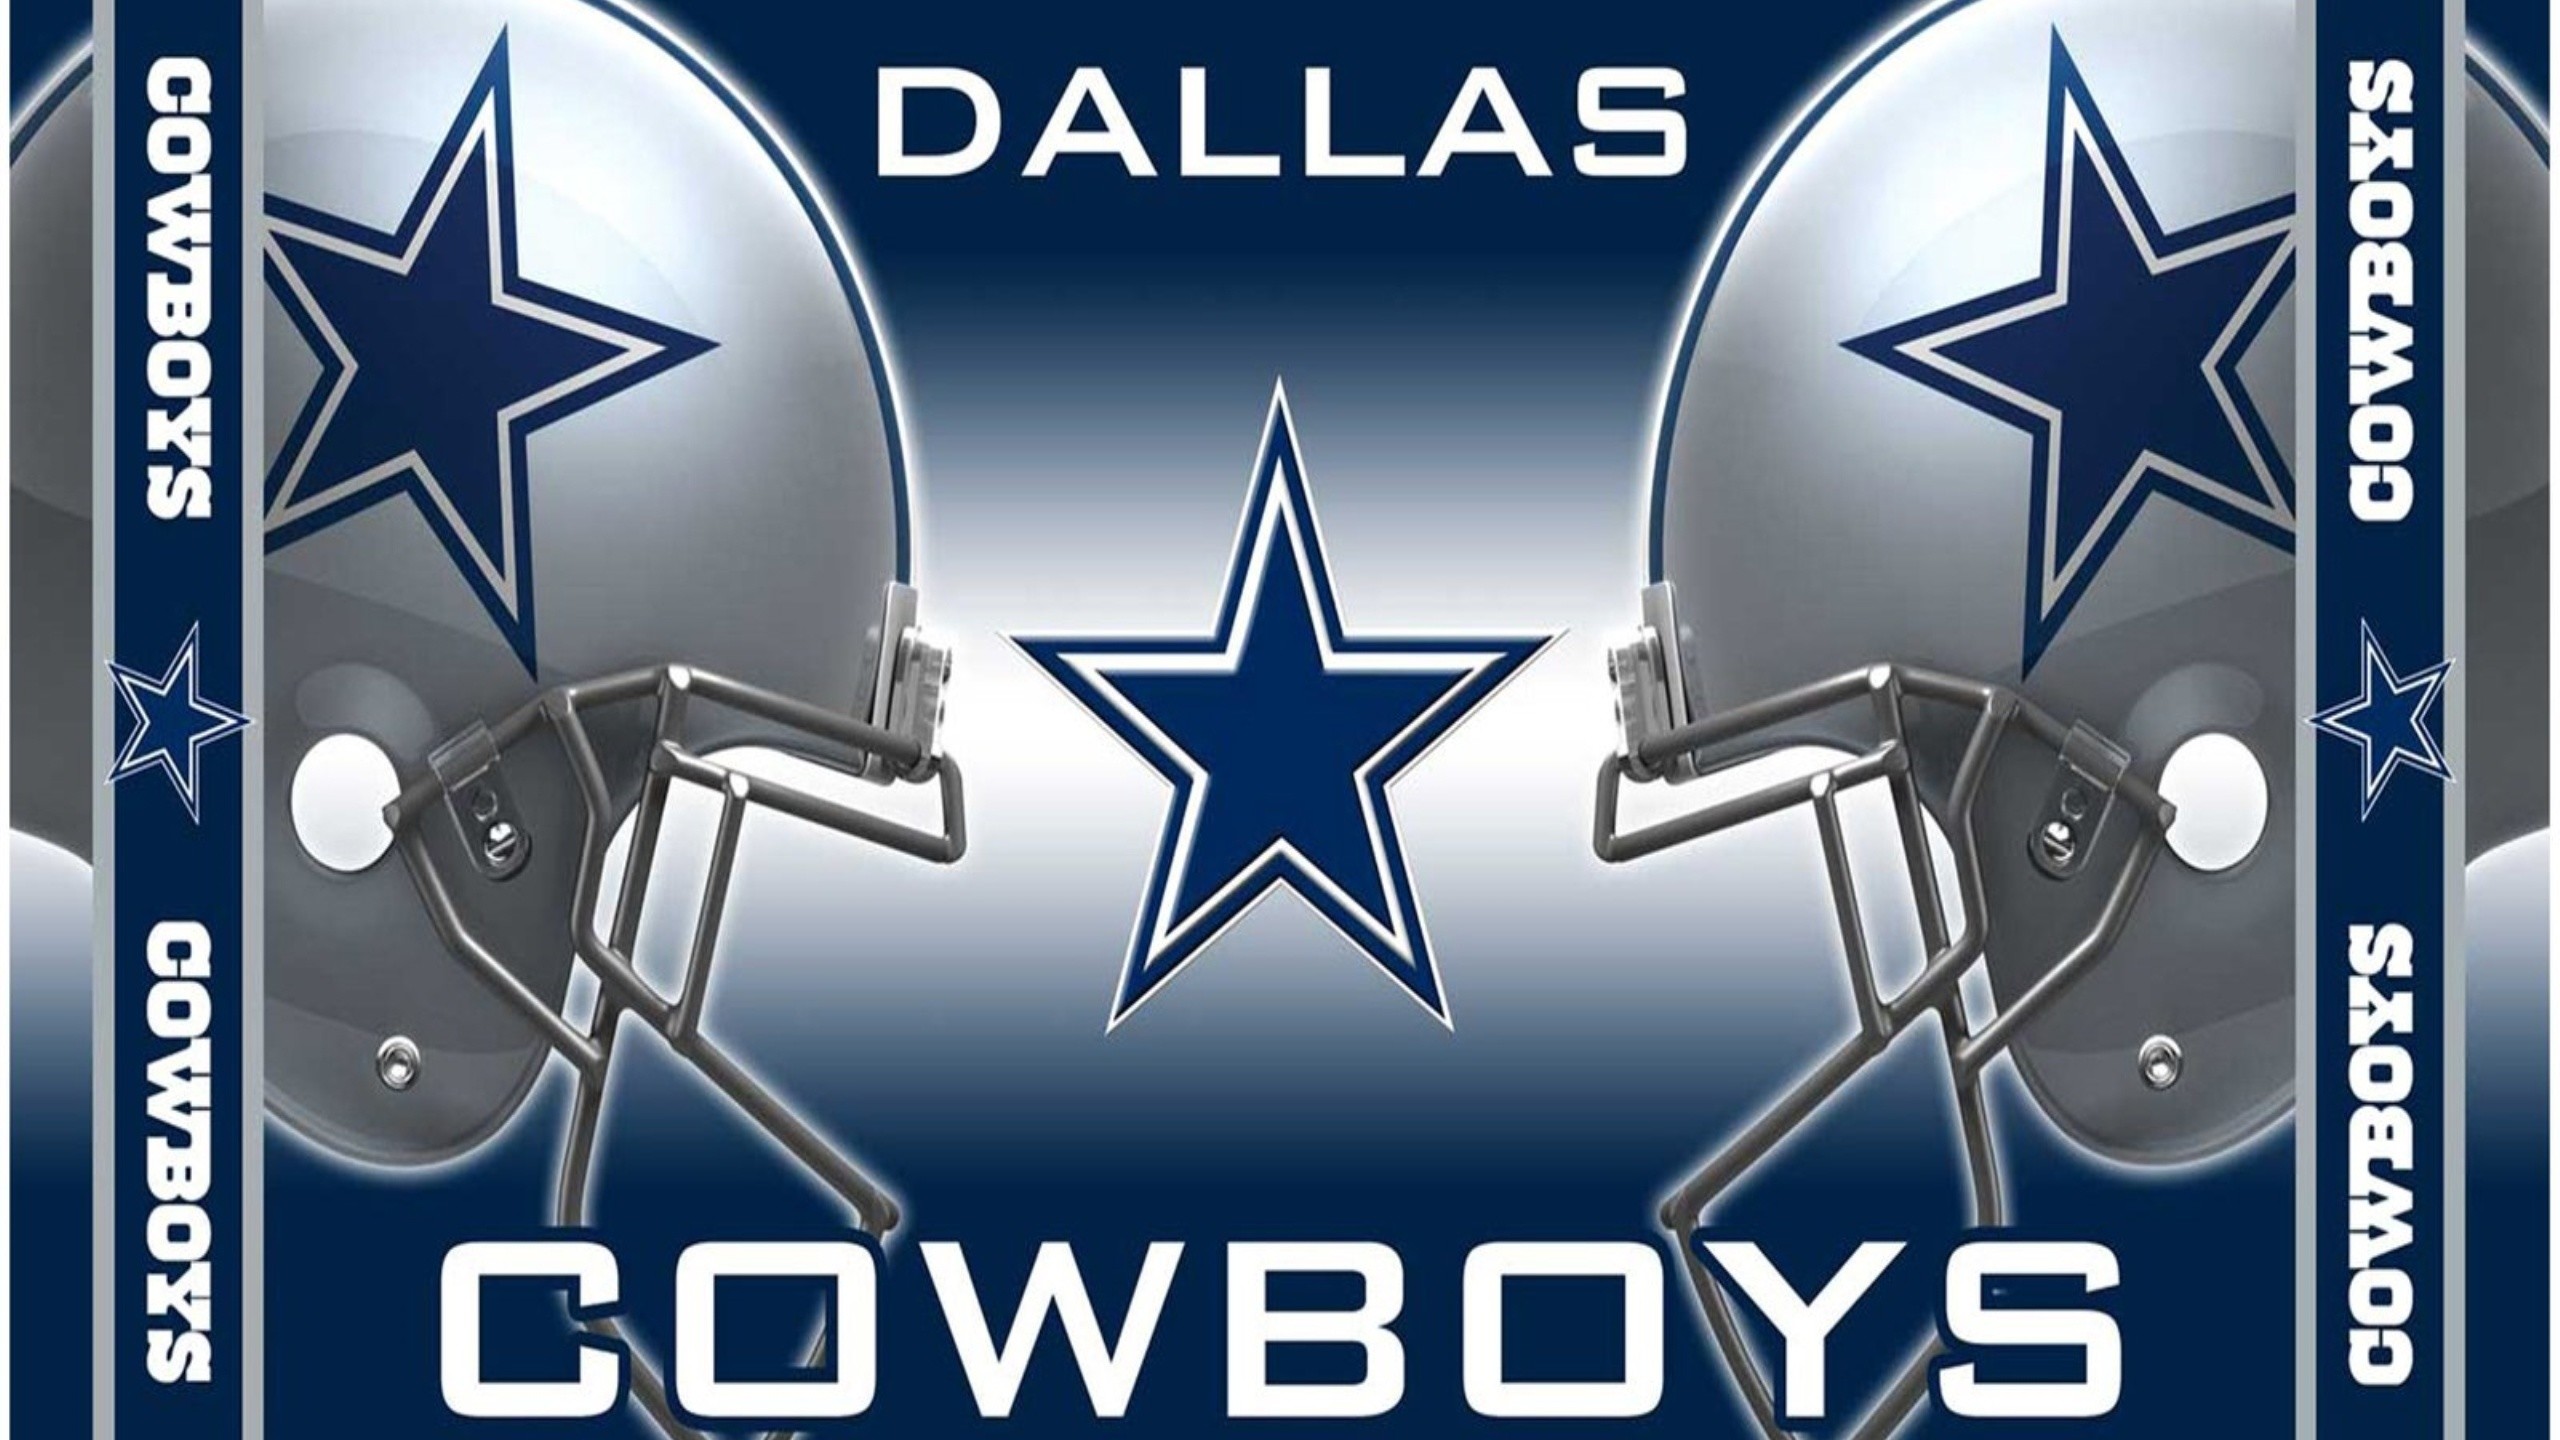 Wallpaper Cowboys Free wallpaper download 25601440 Dallas Cowboys Helmet Wallpapers 38 Wallpapers